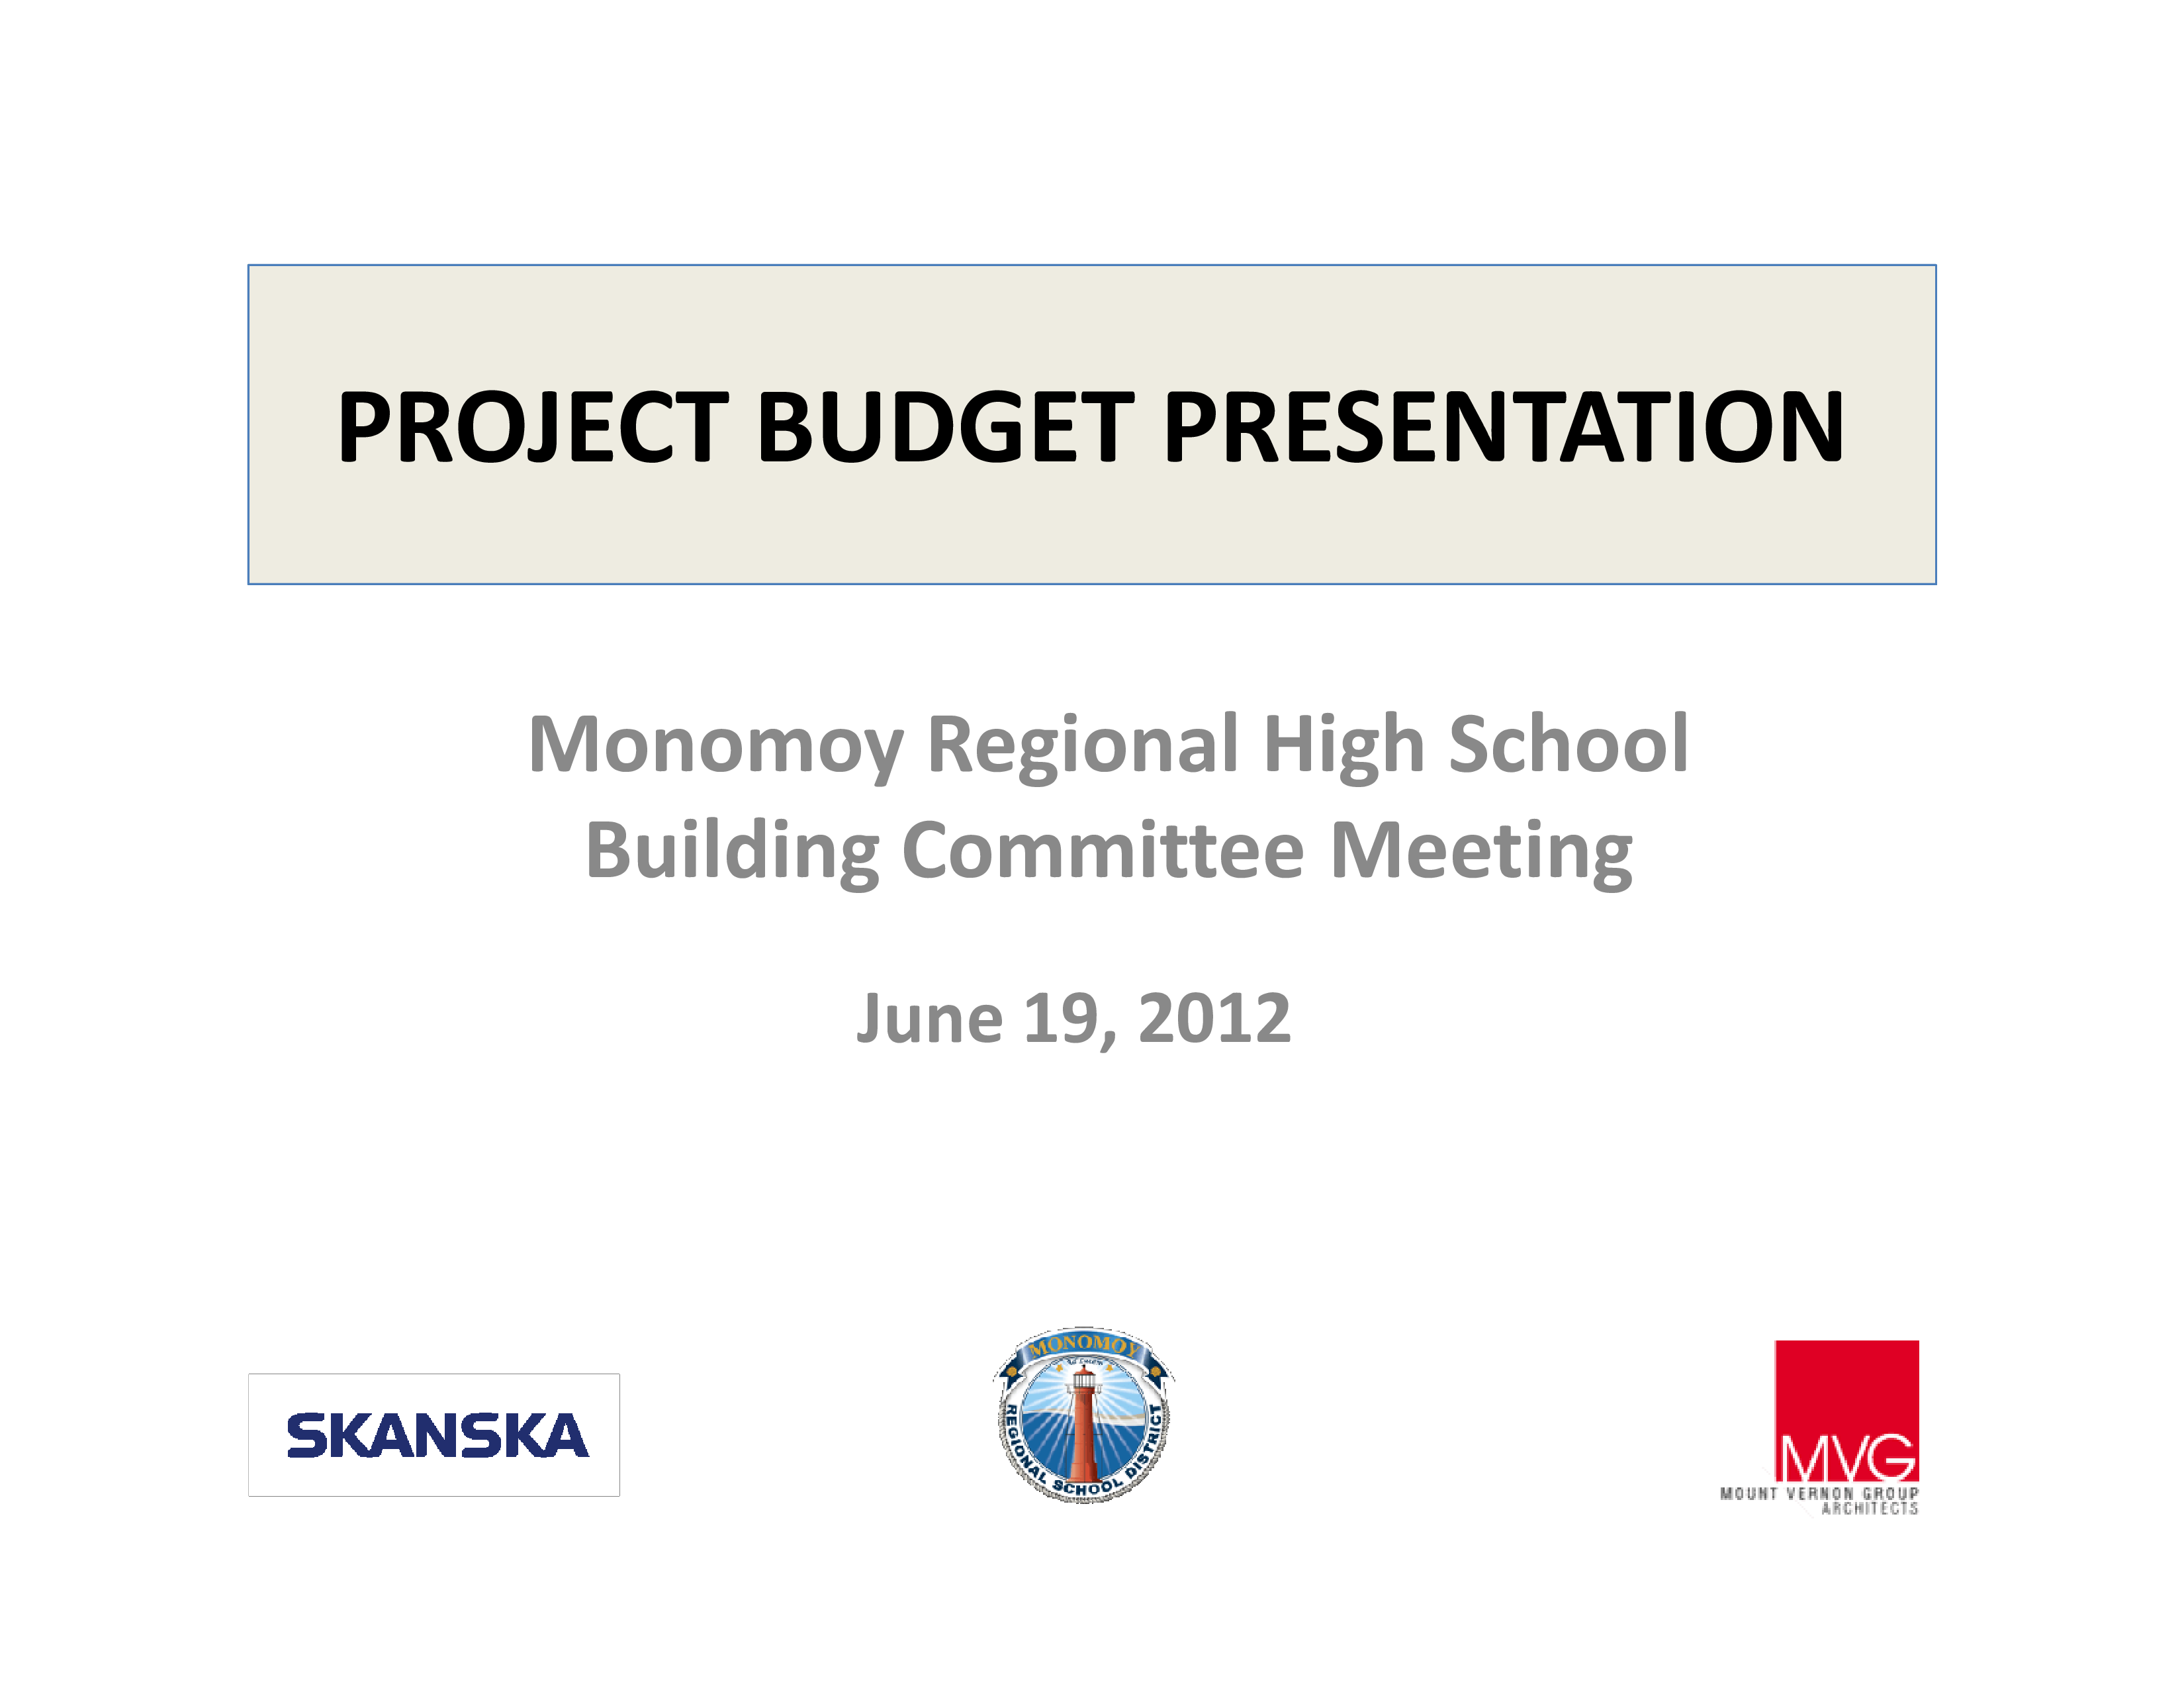 presentation of the budget